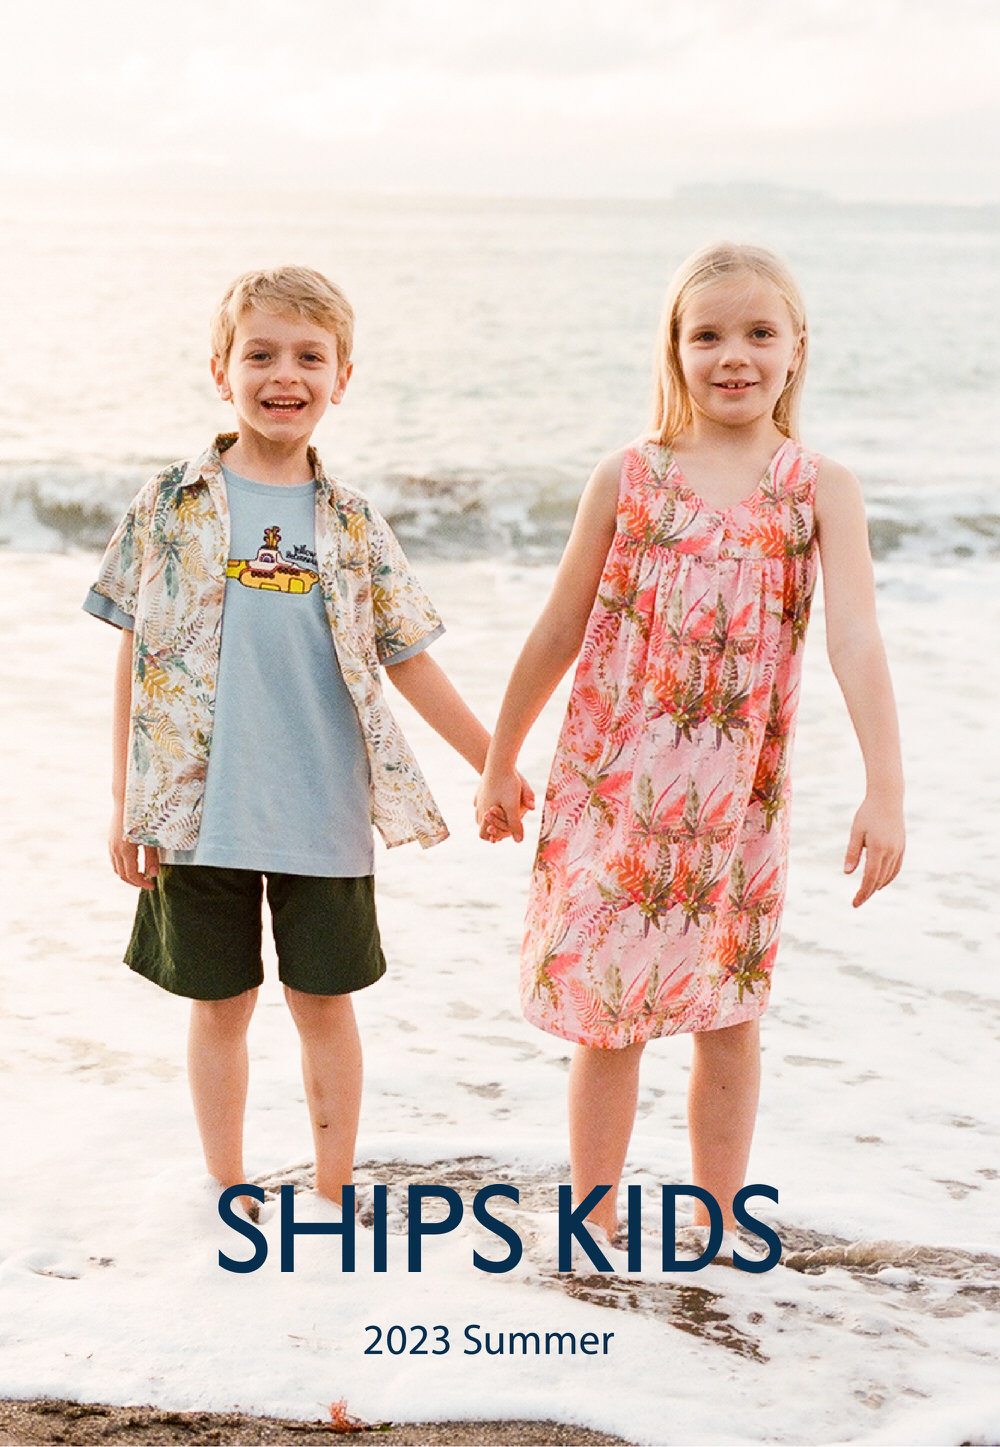 SHIPS KIDS 2023 SUMMER